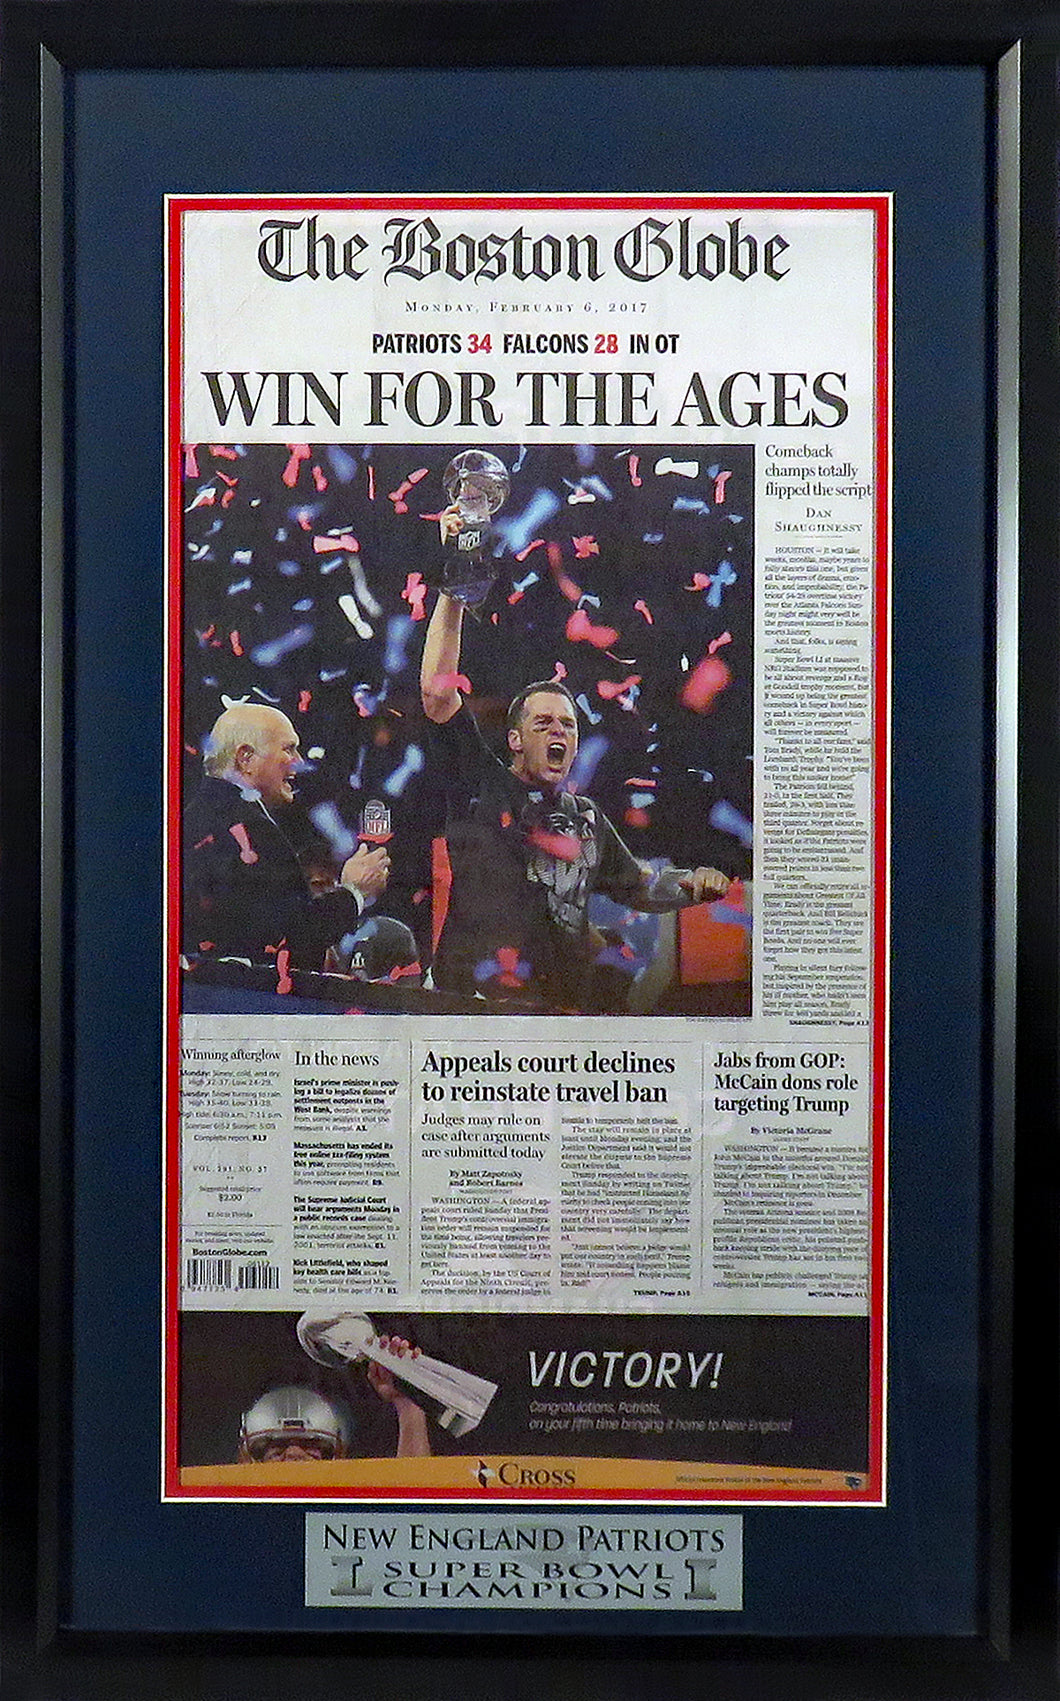 New England Patriots “Super Bowl LI Champions” Boston Globe Framed Newspaper